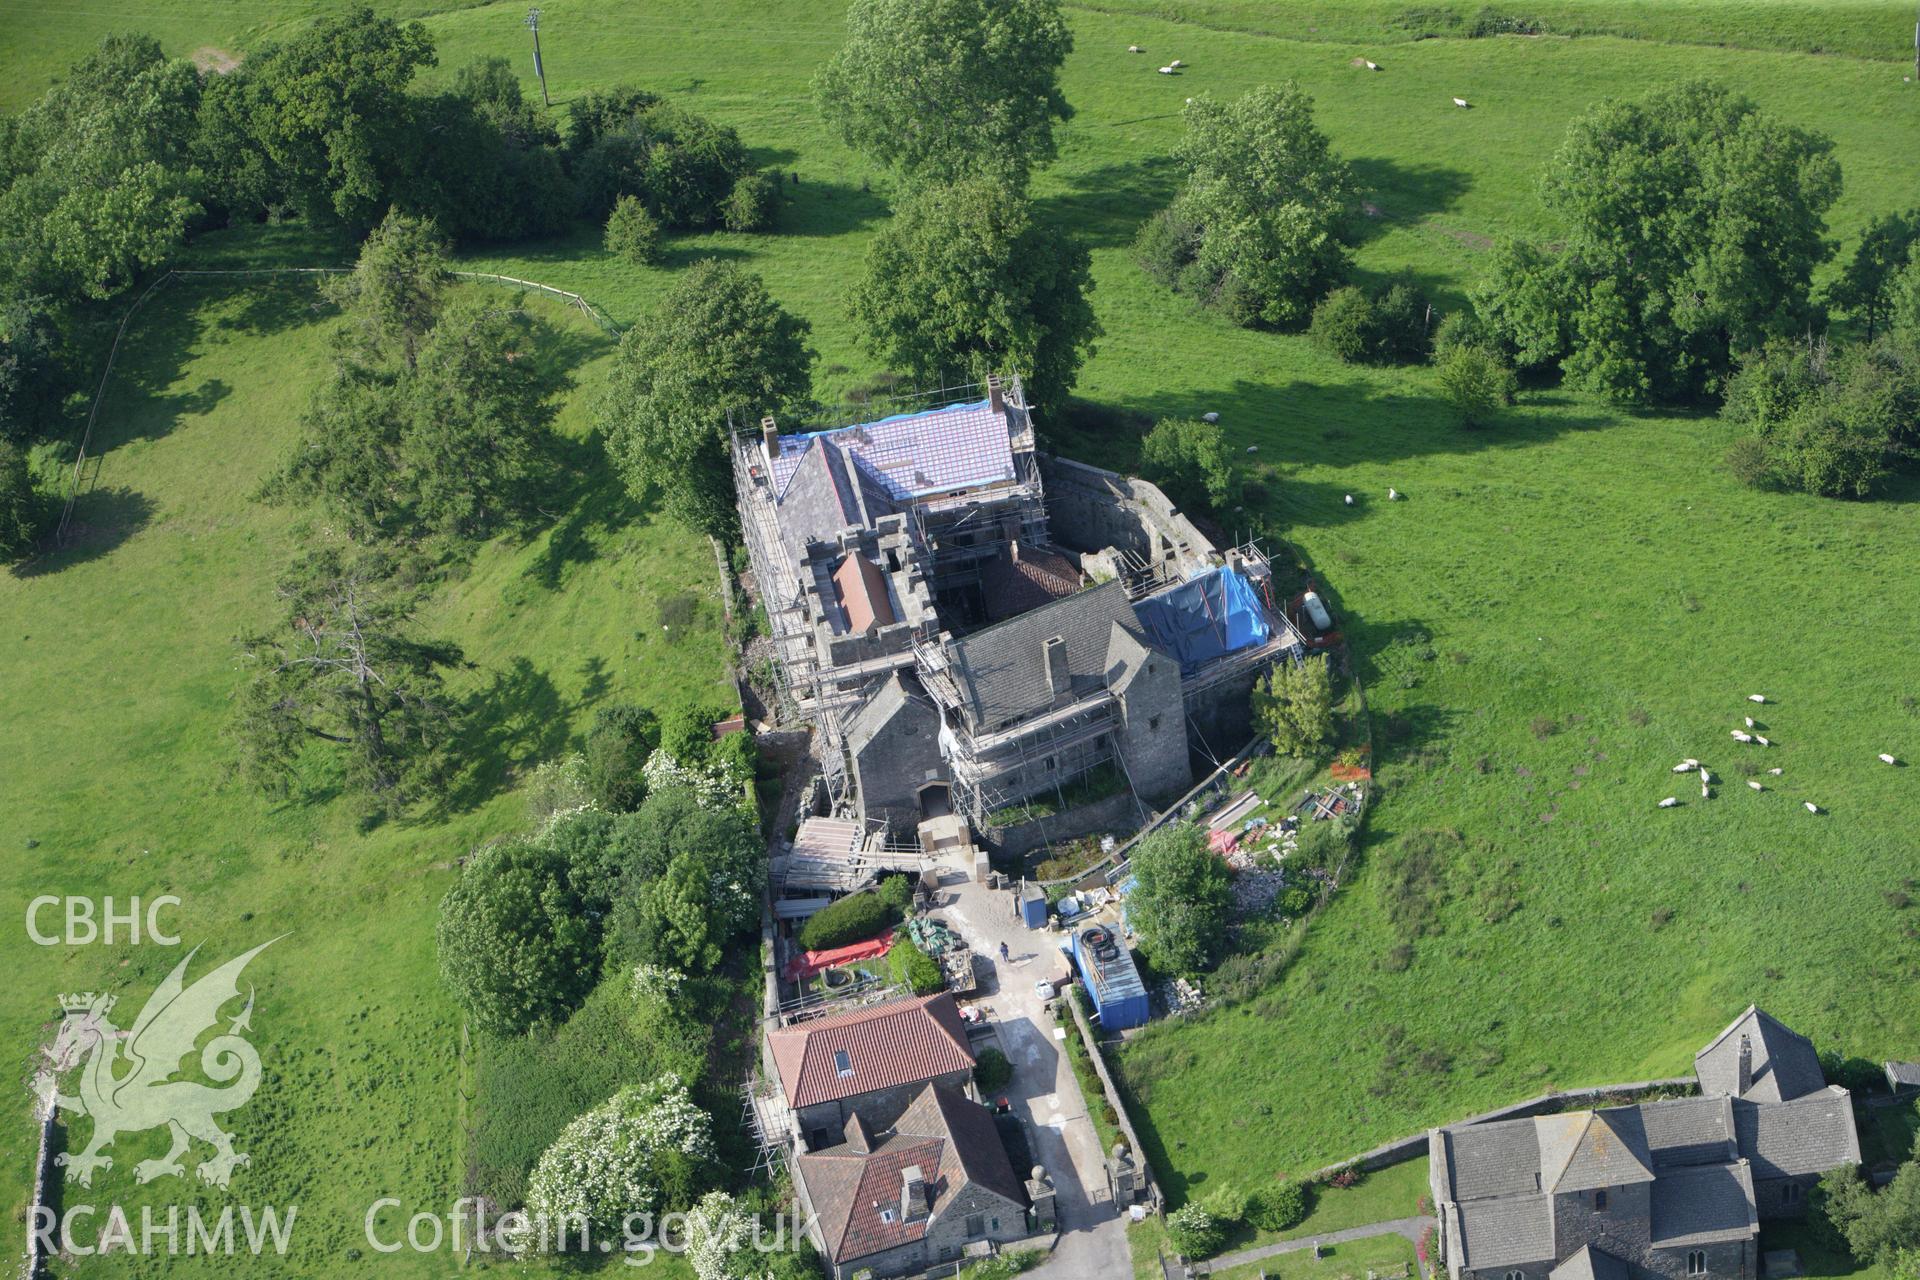 RCAHMW colour oblique aerial photograph of Penhow Castle. Taken on 11 June 2009 by Toby Driver